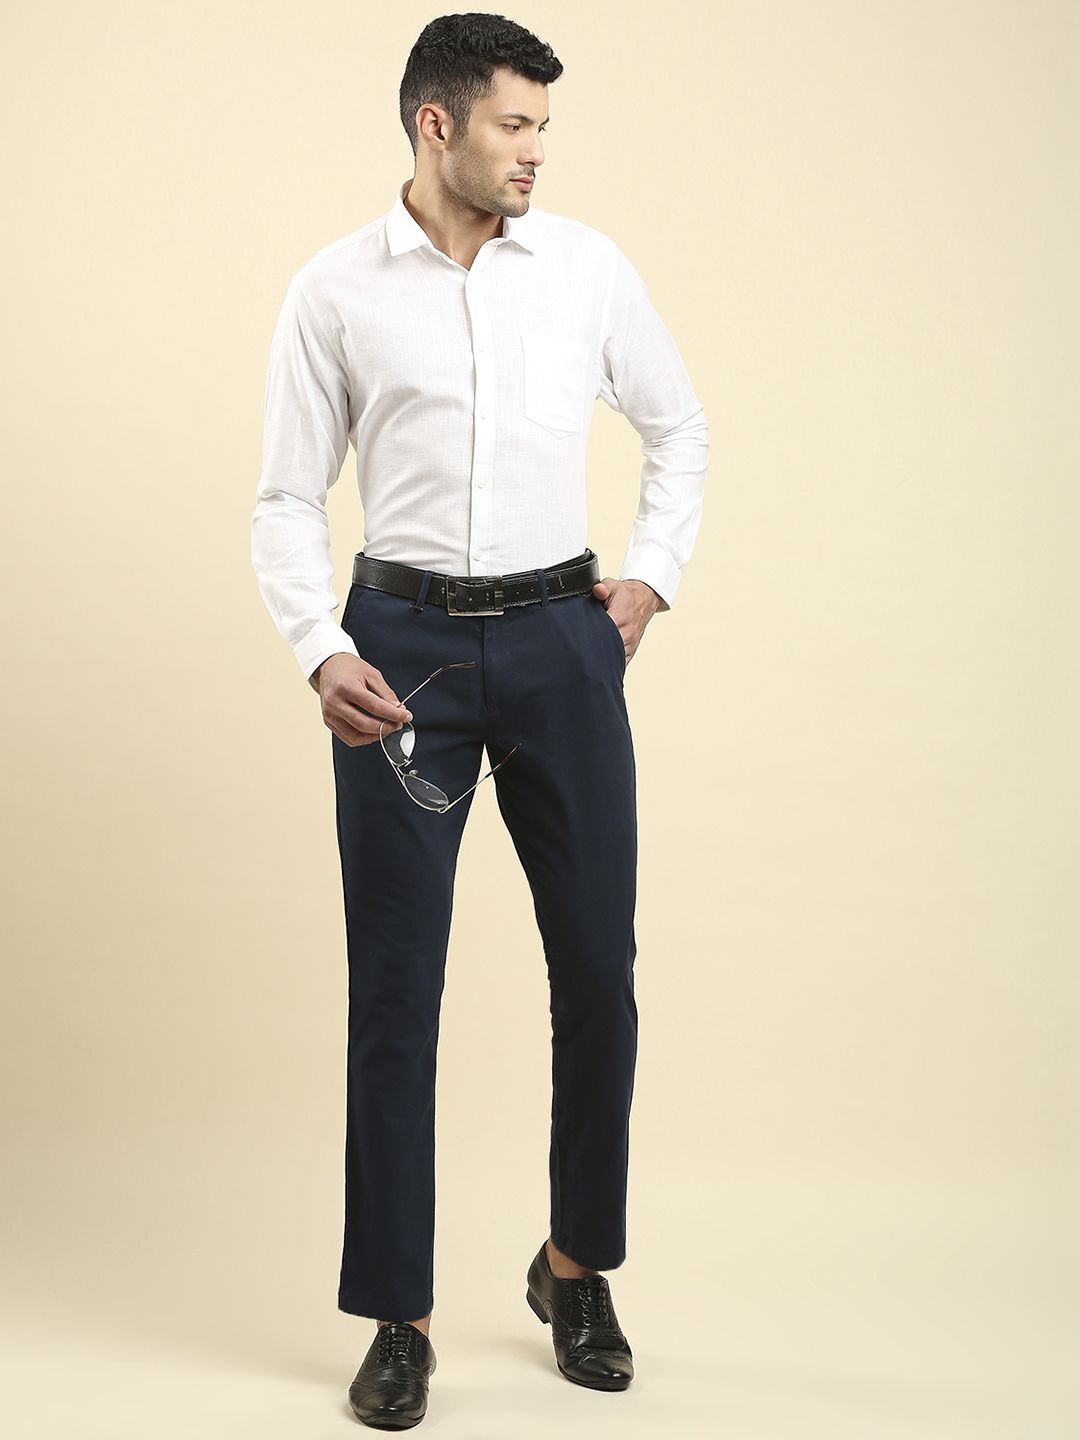 Buy White Formal Shirt for Men Online in India | JAPs Premium Urbanwear  SizeShirt L Color White